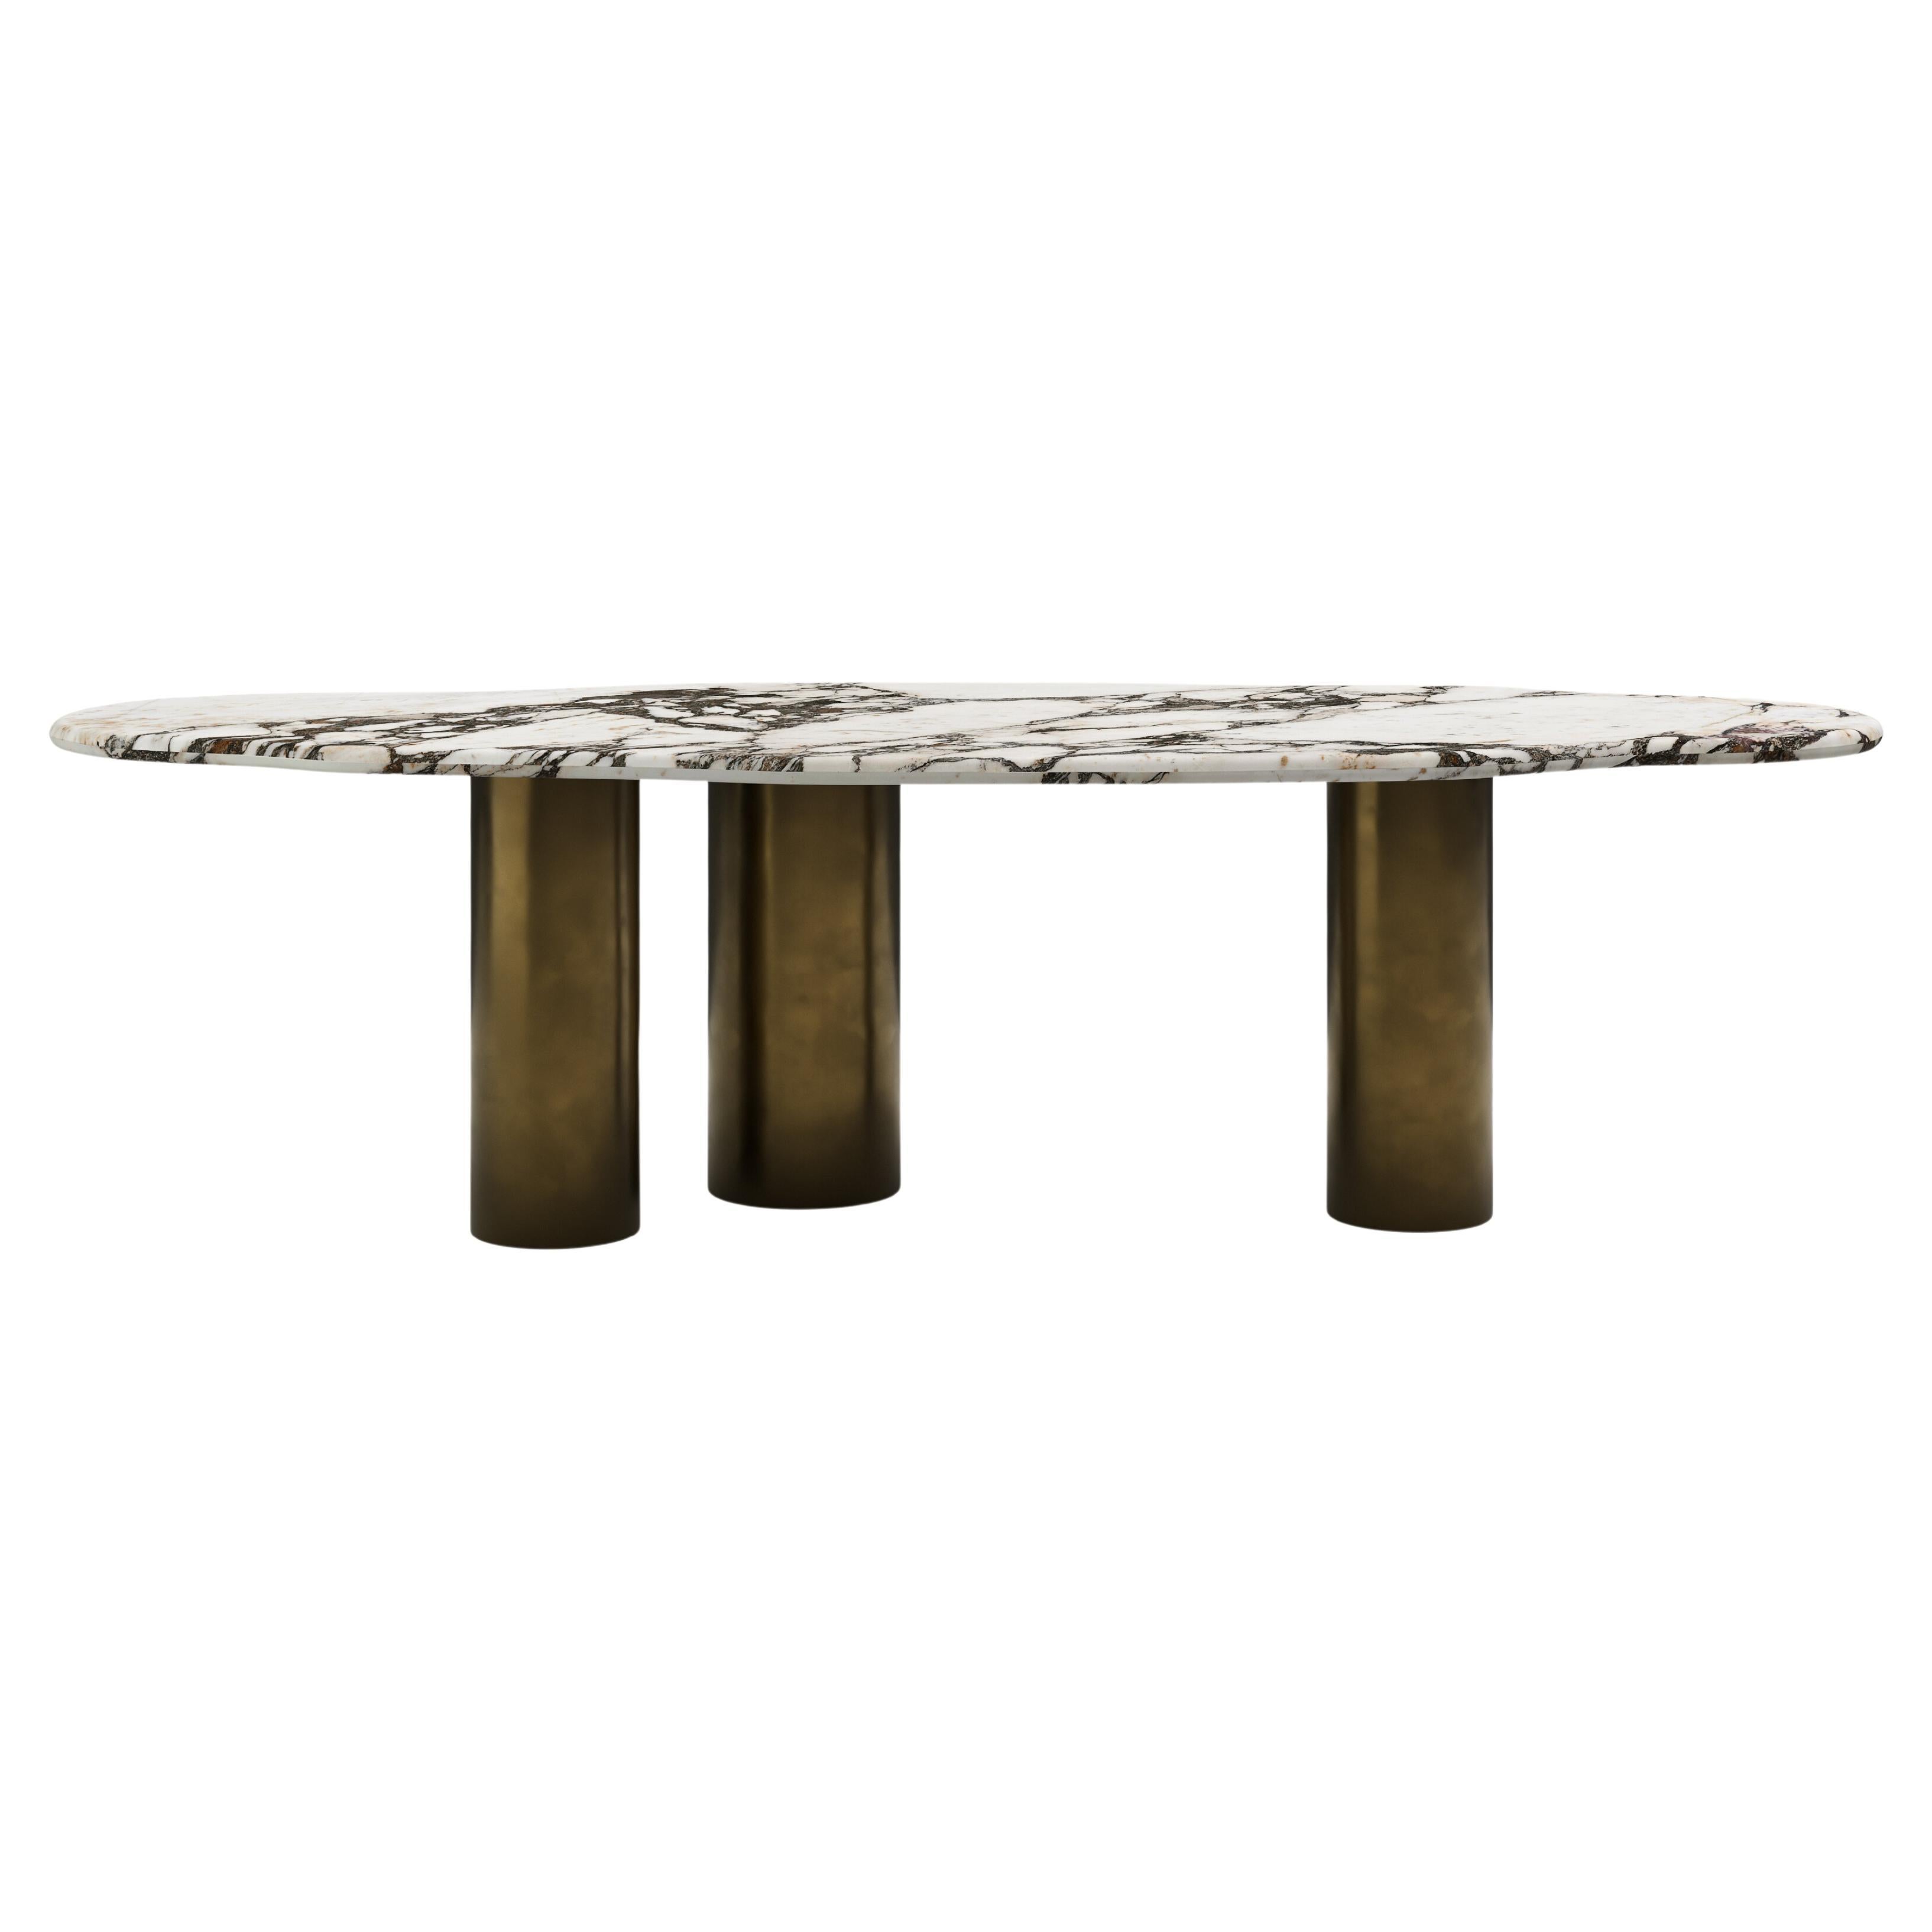 FORM(LA) Lago Freeform Dining Table 108”L x 48”W x 30”H Viola Marble & Bronze For Sale